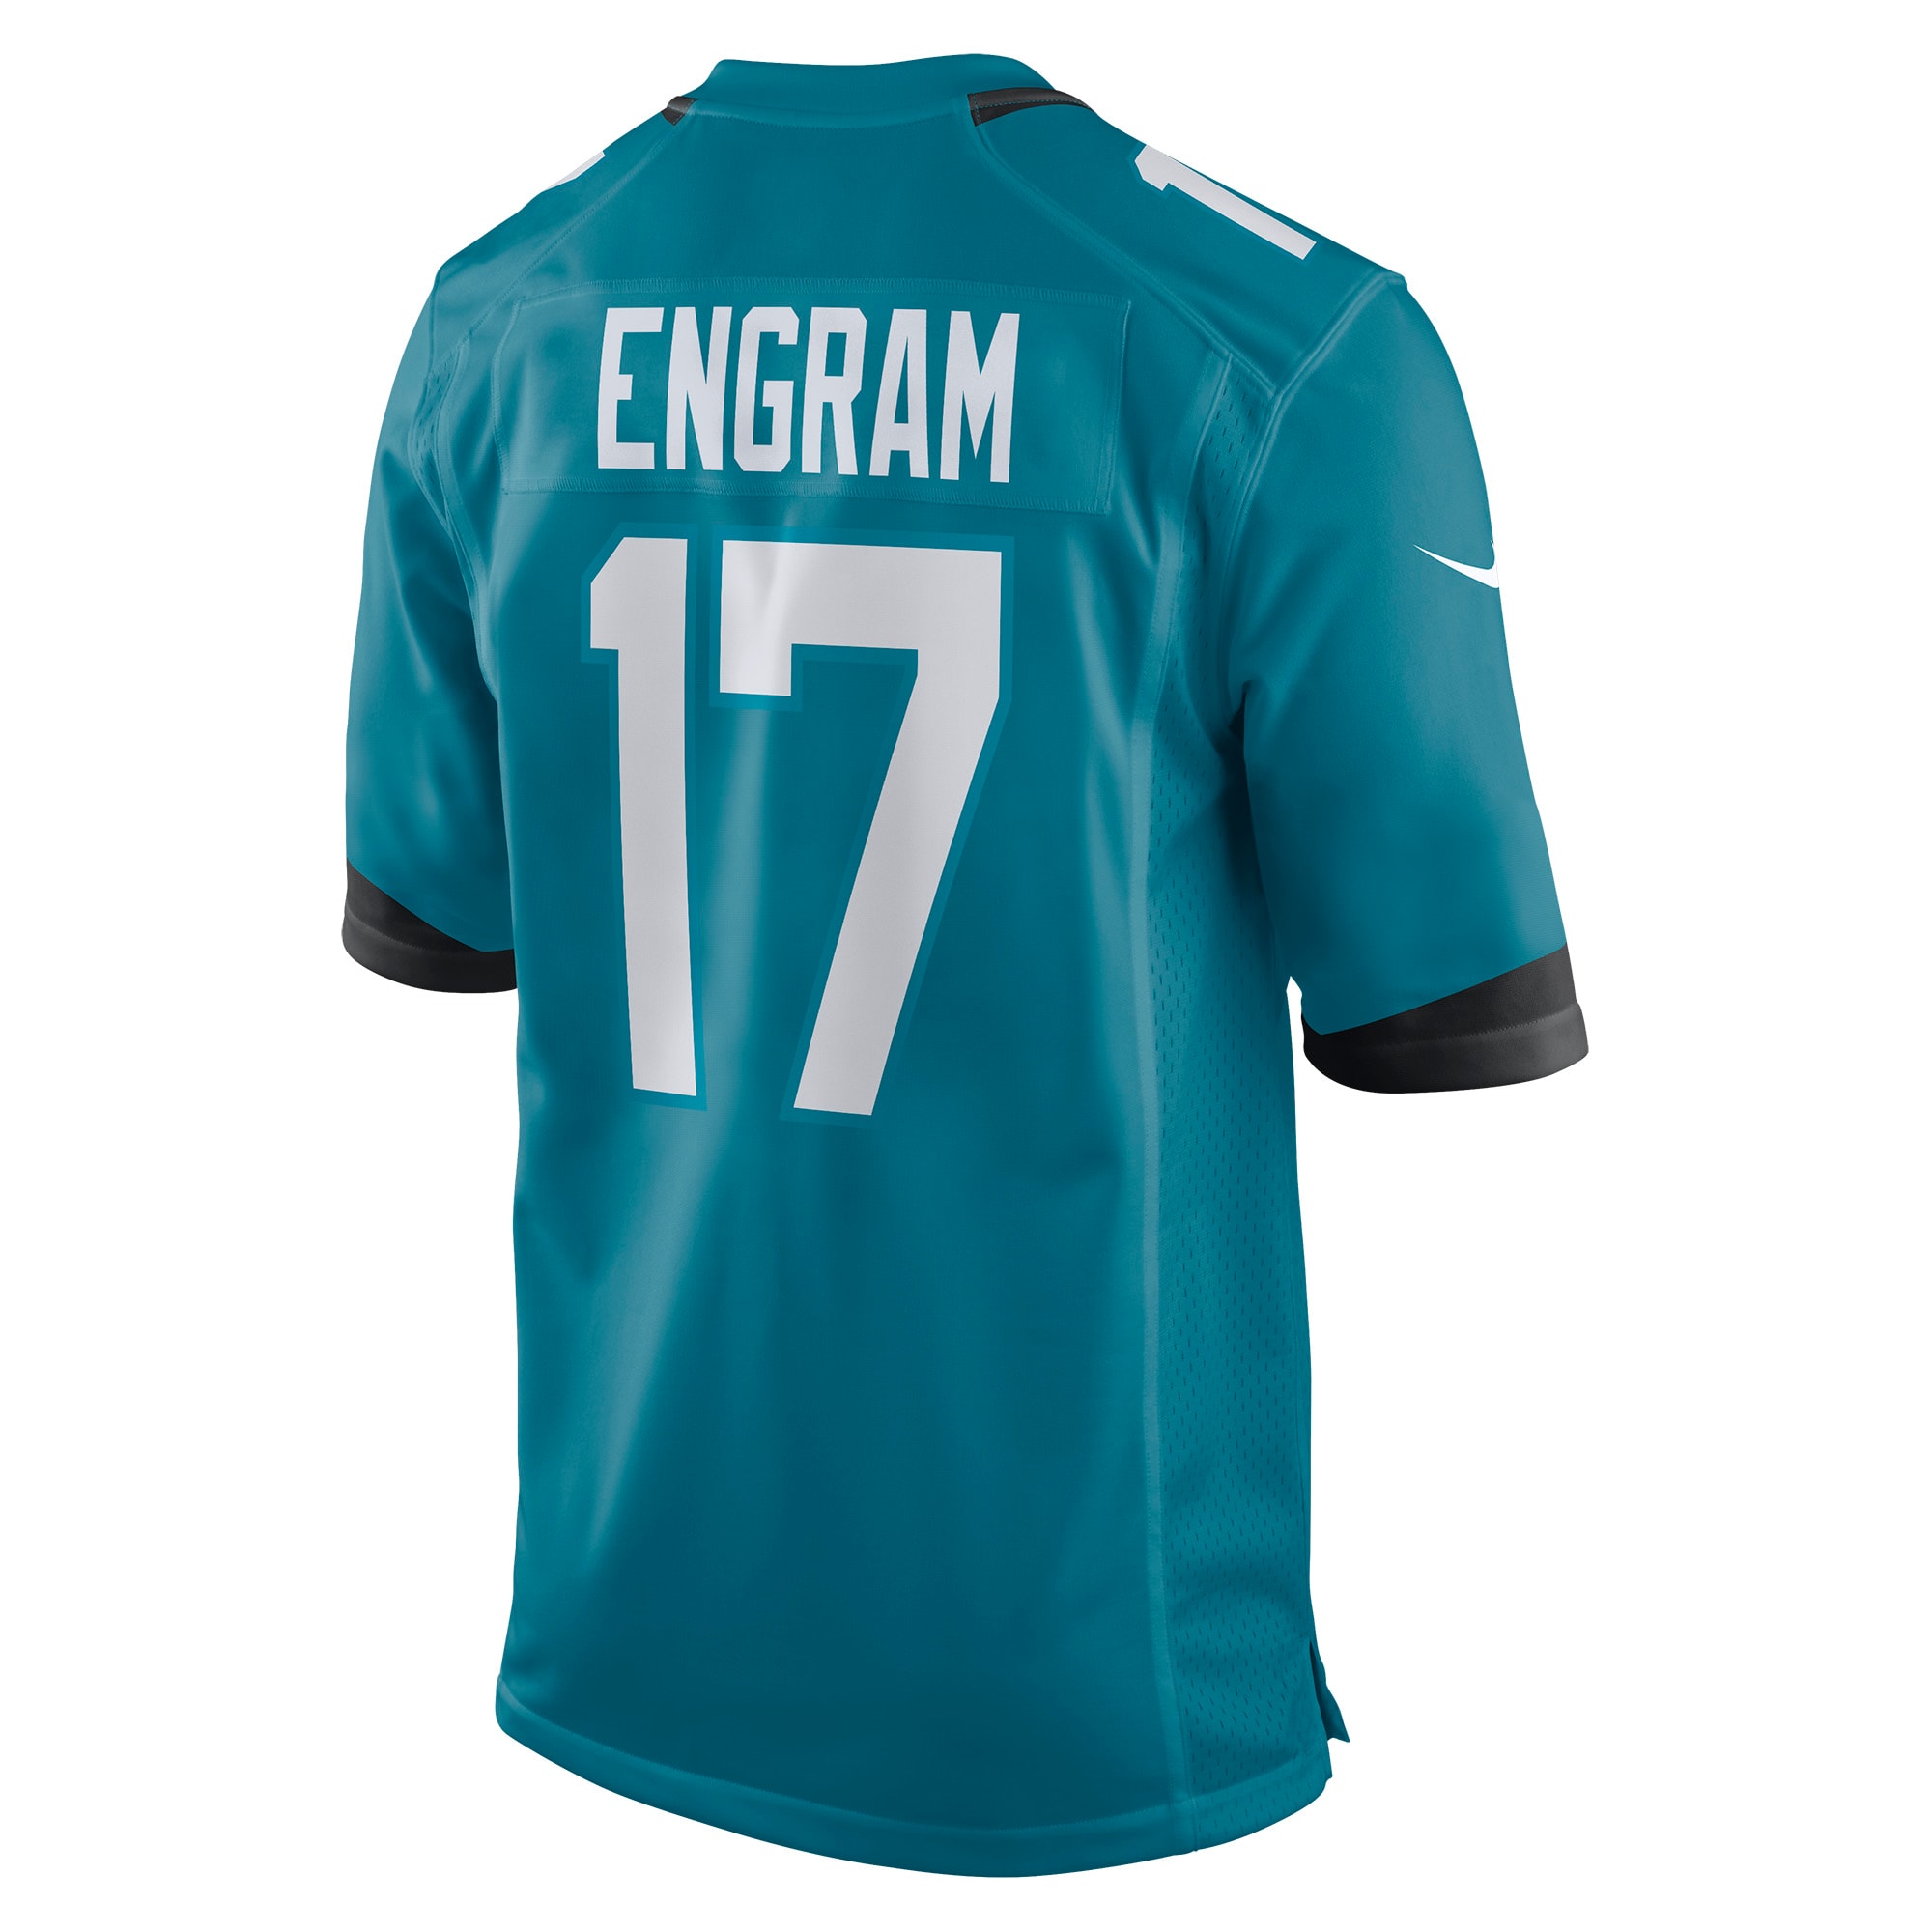 Men's Jacksonville Jaguars Jerseys Teal Evan Engram Game Style